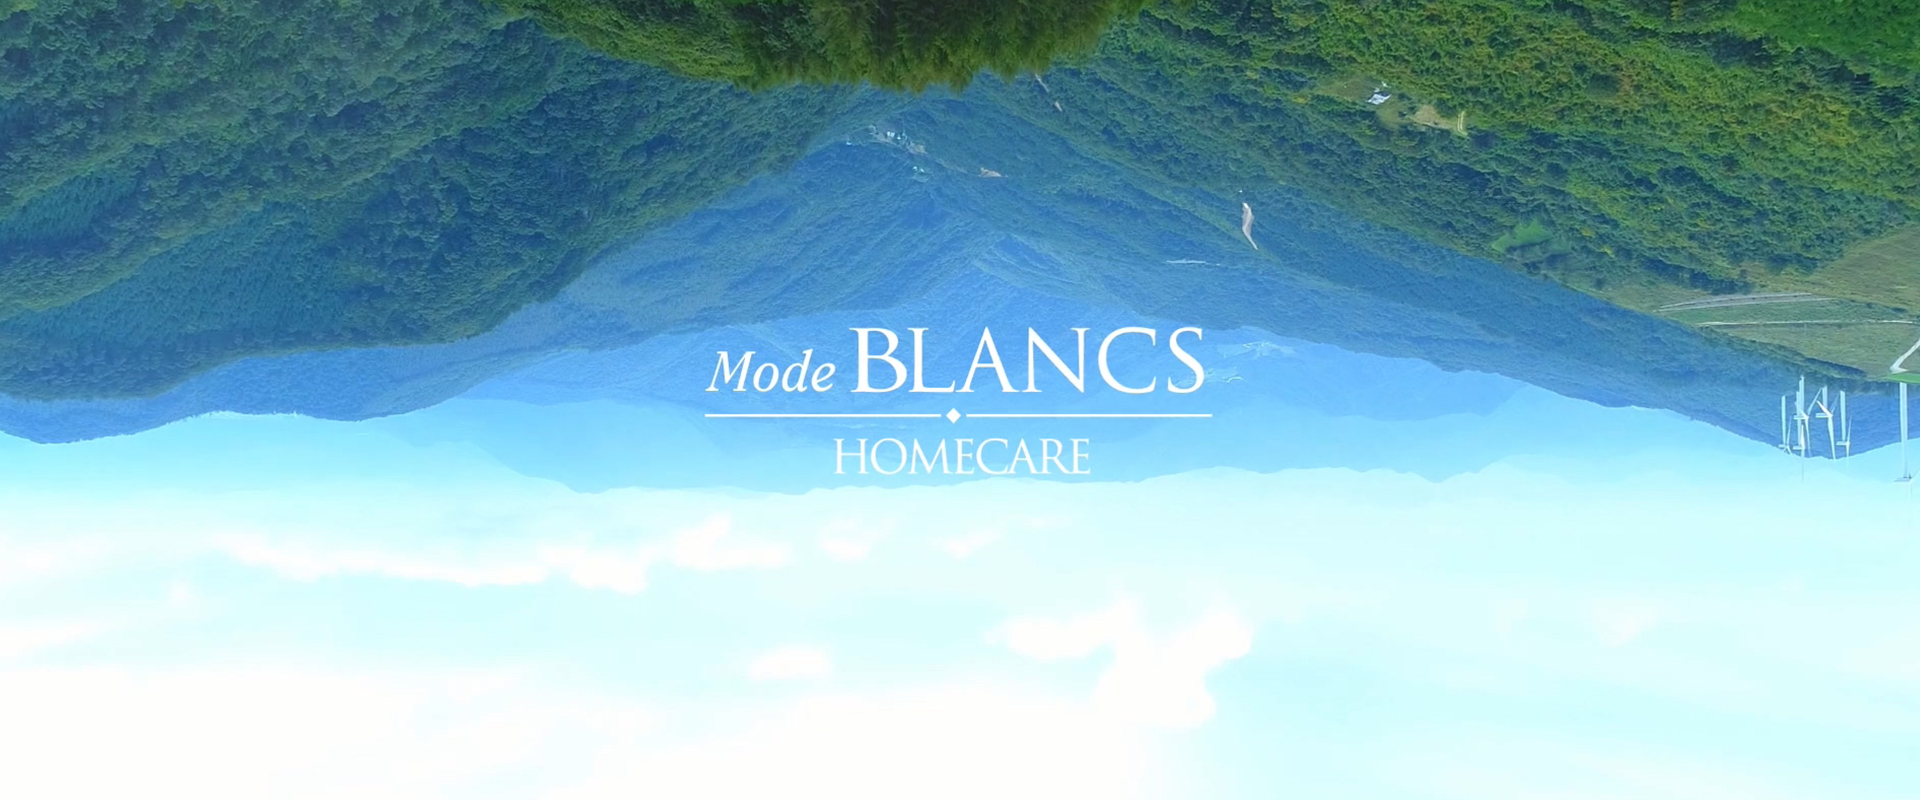 Mode BLANCS